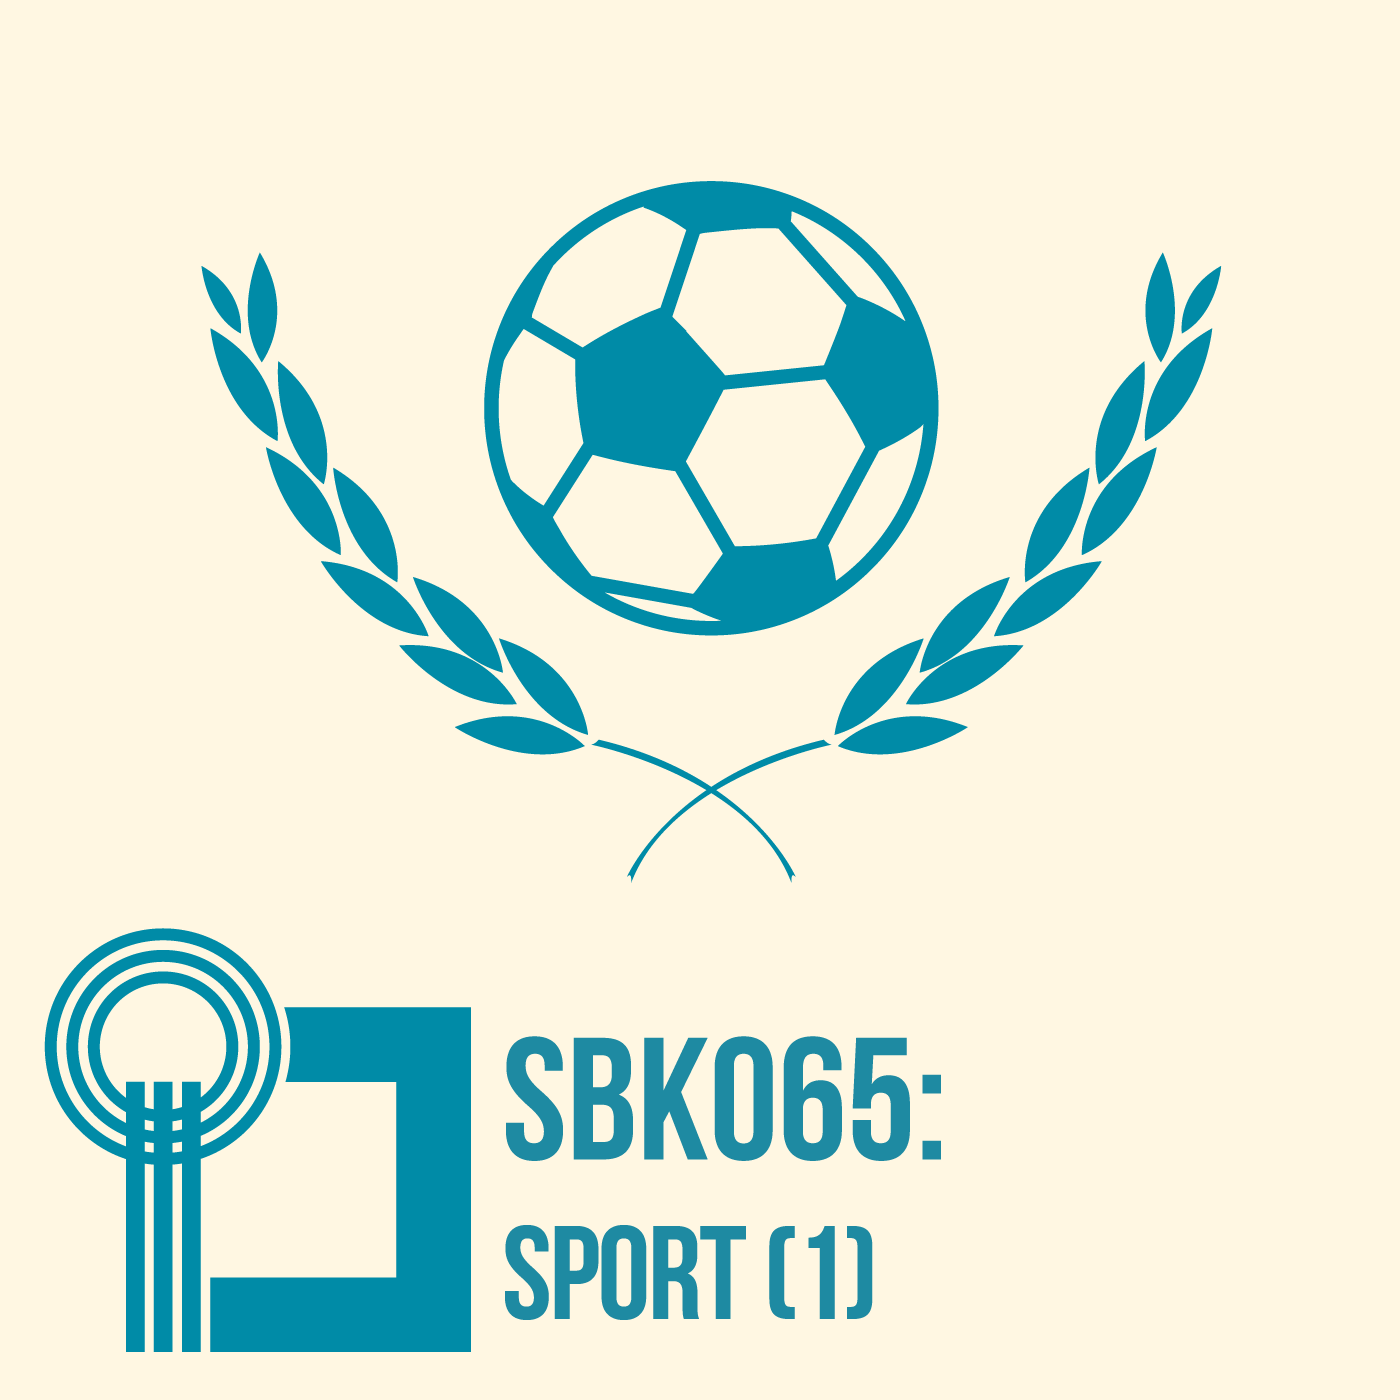 Sport (1)